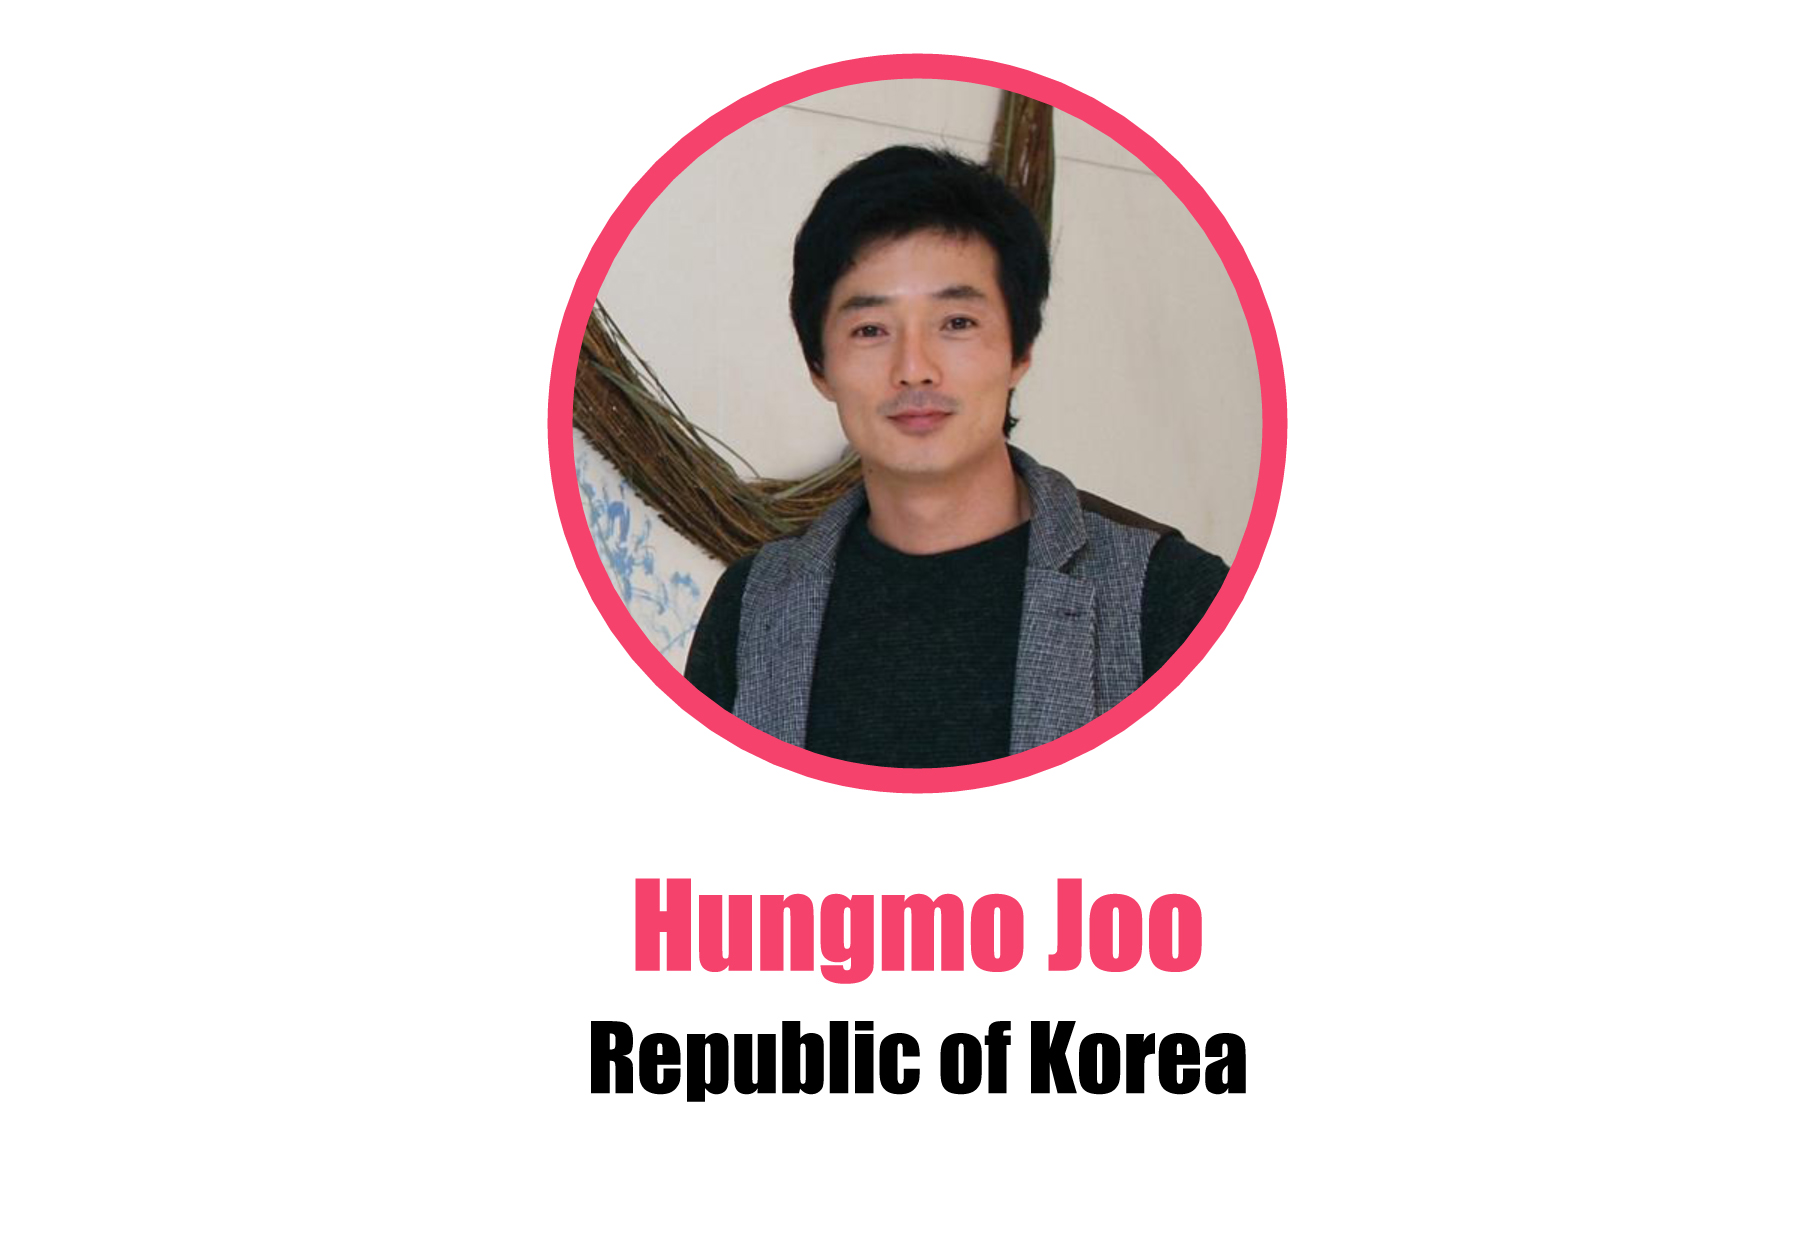 Republic of Korea_Hung Mo Joo, Momo